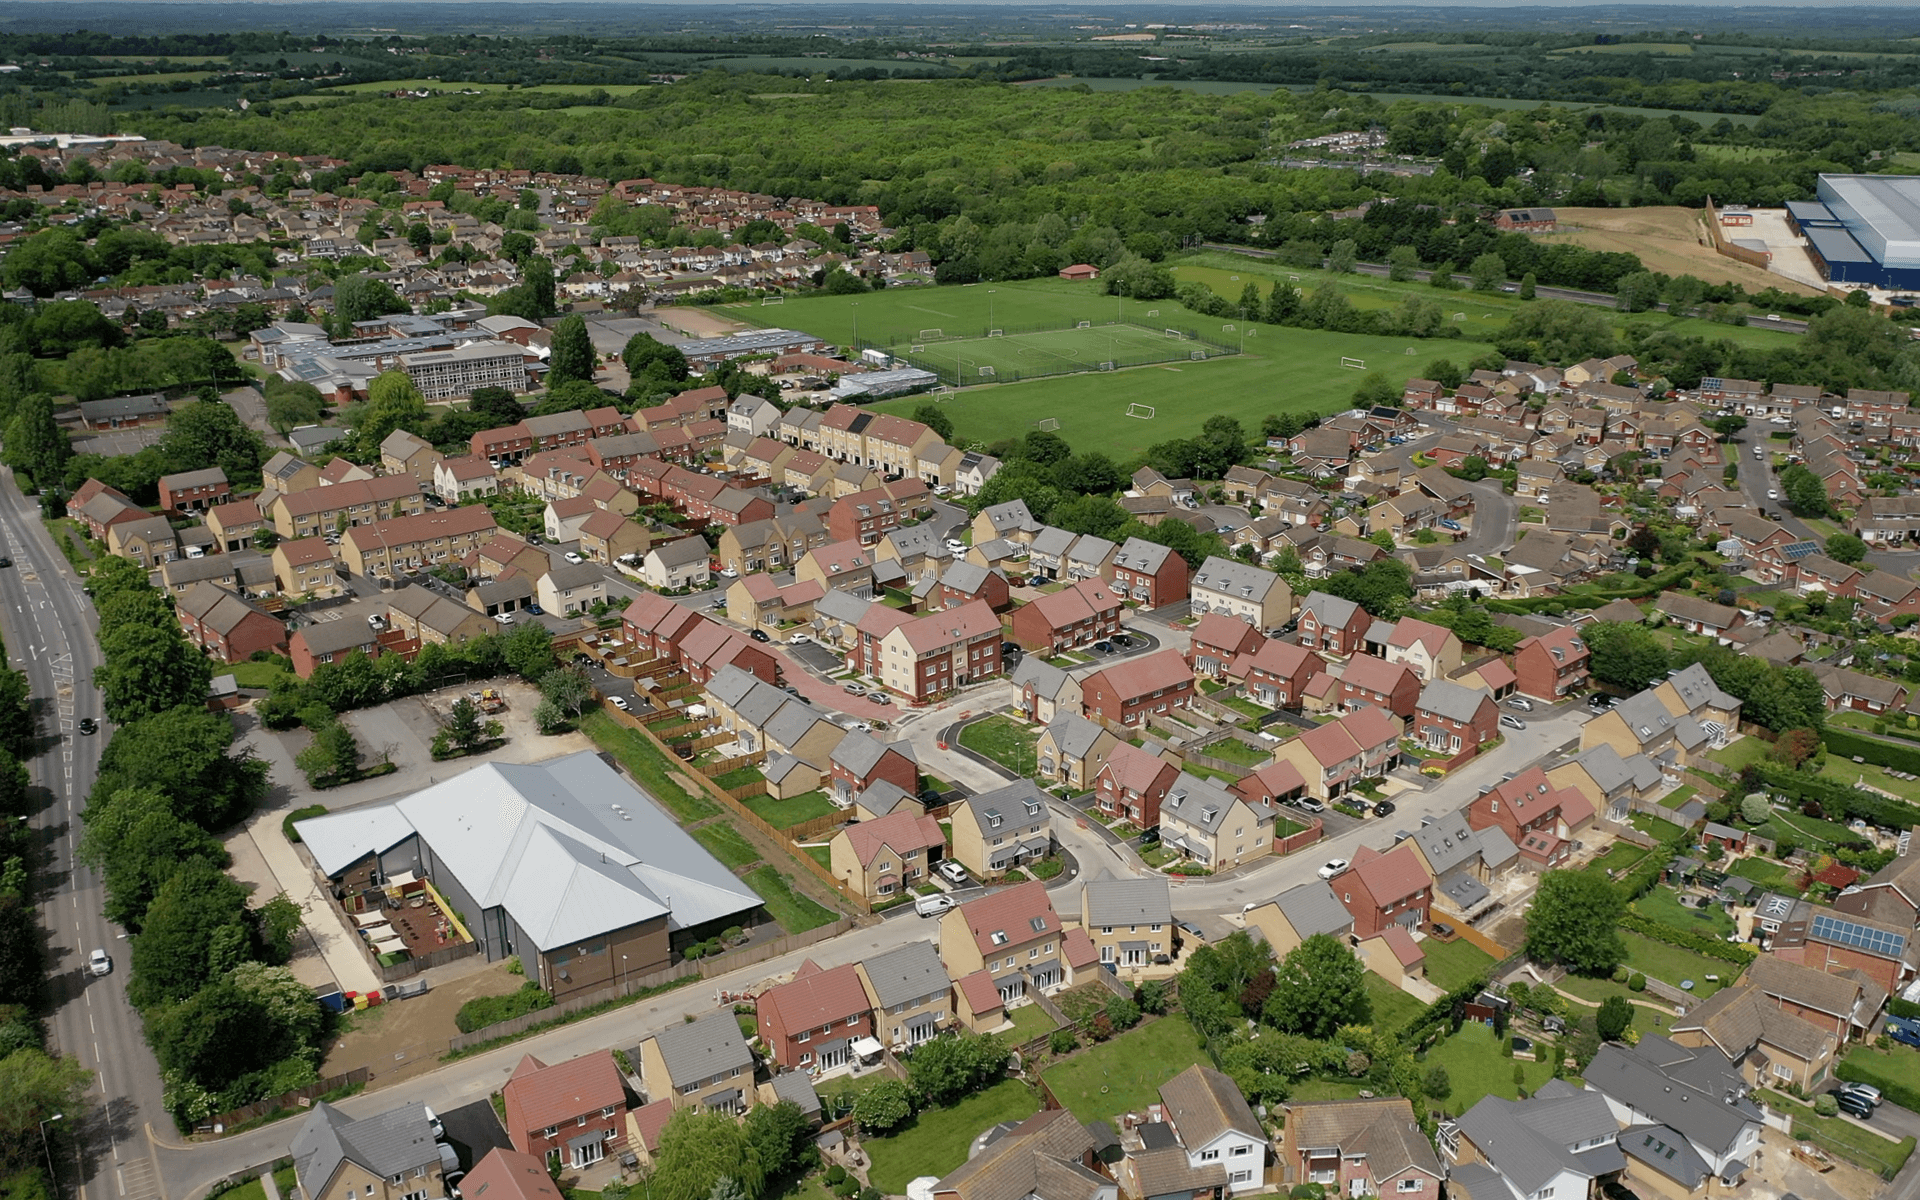 "Mavic 2 Pro" aerial drone photo of a completed "Barratt Homes" development site in Kingsdown, Swindon